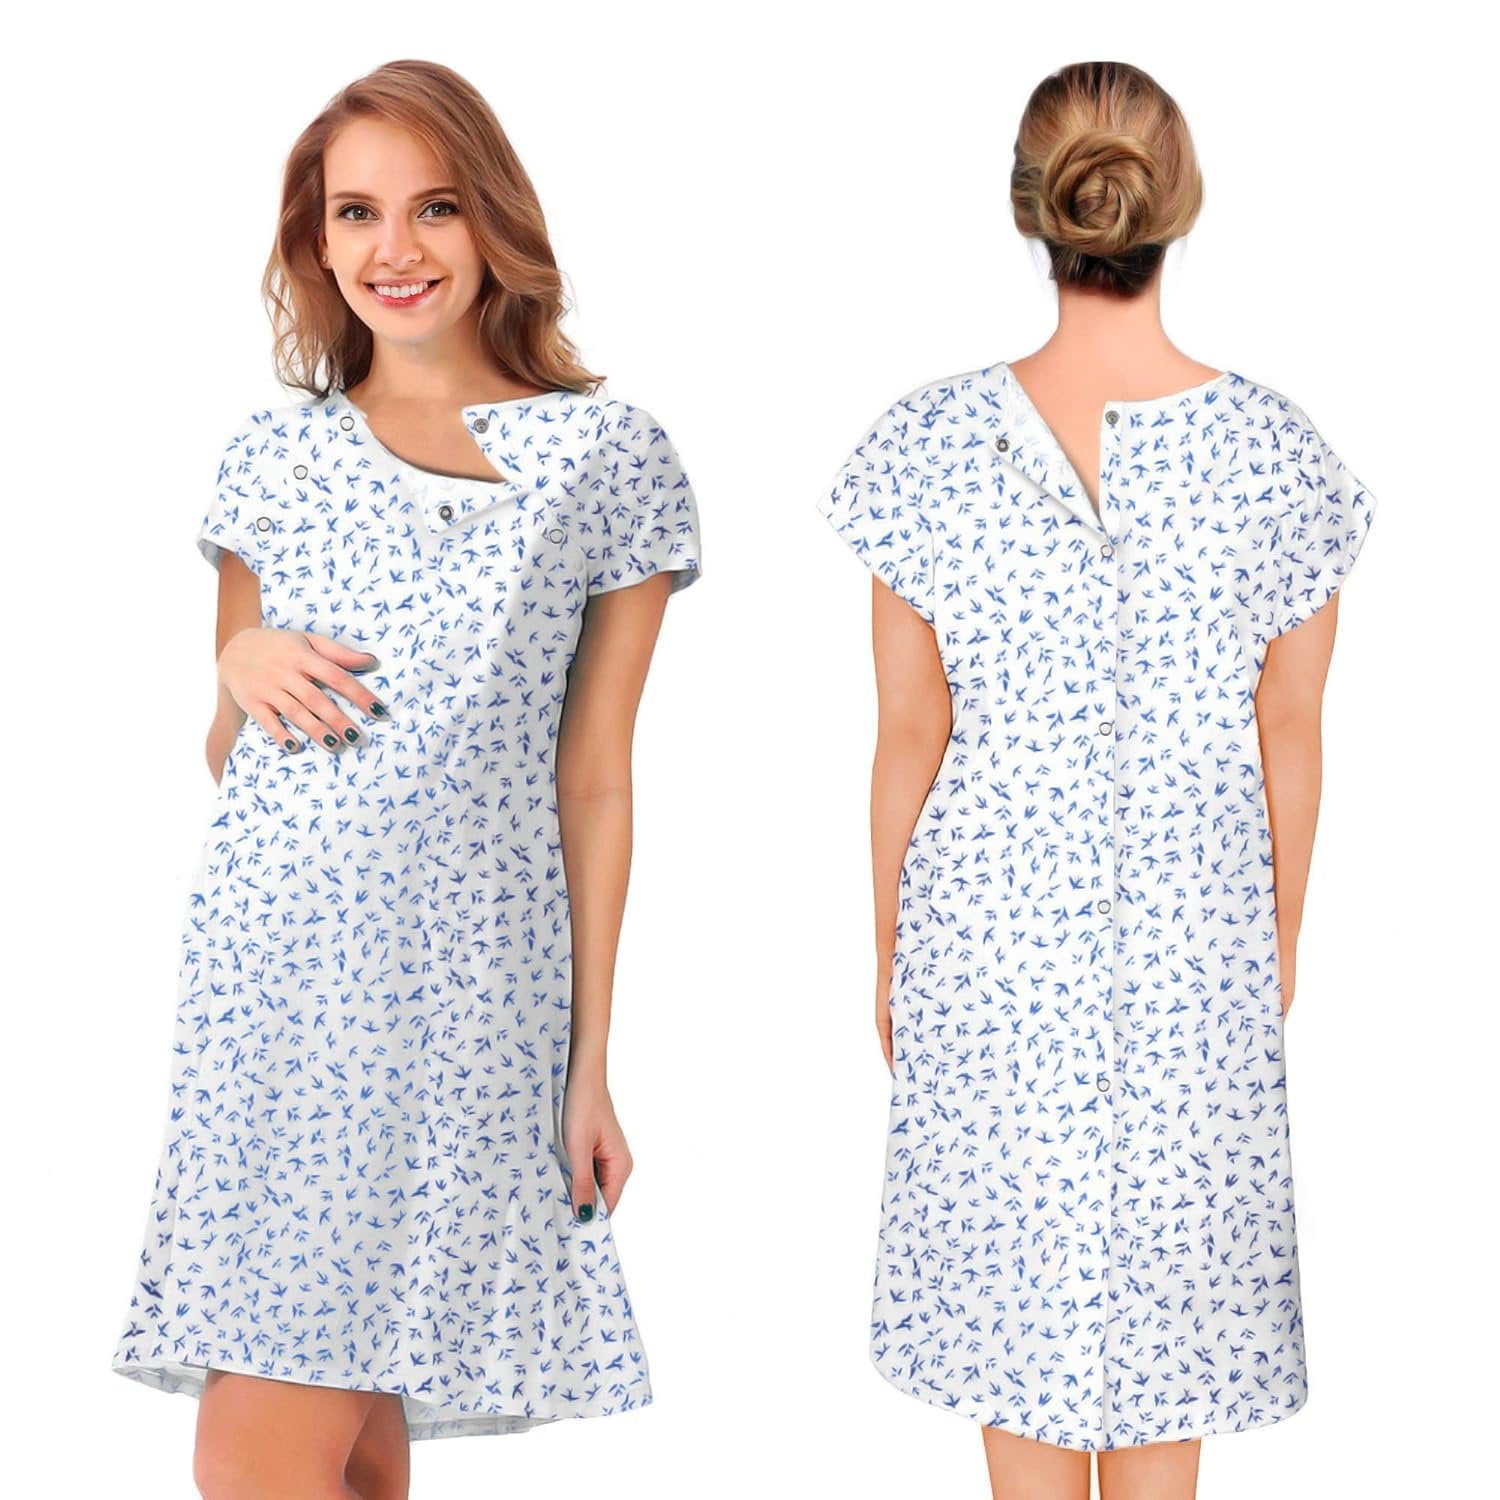 Demure Print Hospital Gown - 2 Pack - Walmart.com